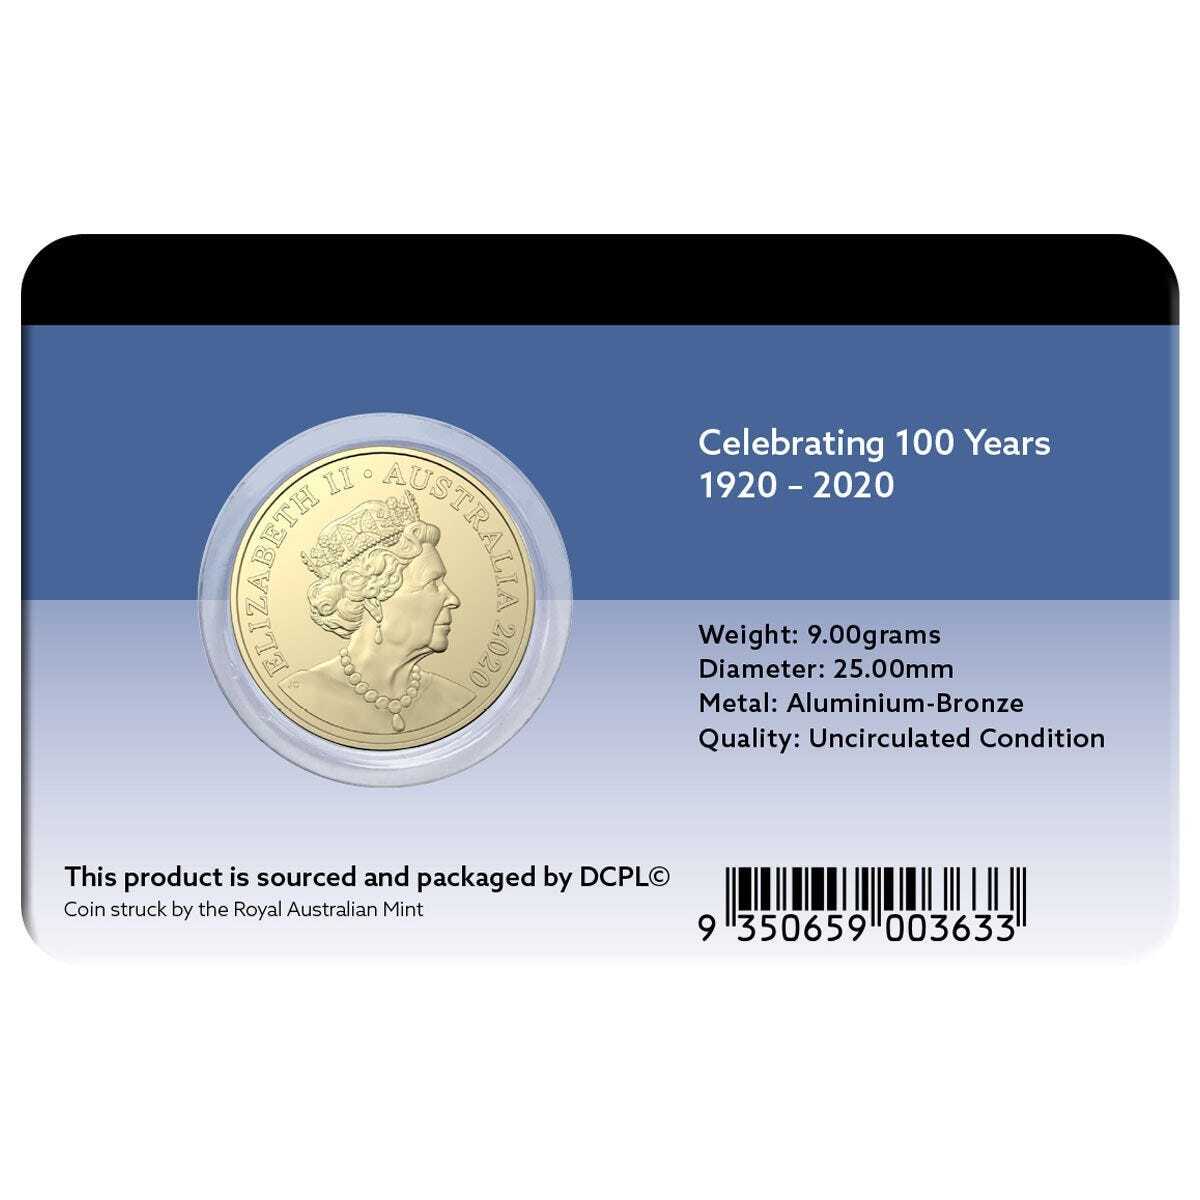 2020 $1 QANTAS Centenary UNC Coin Pack